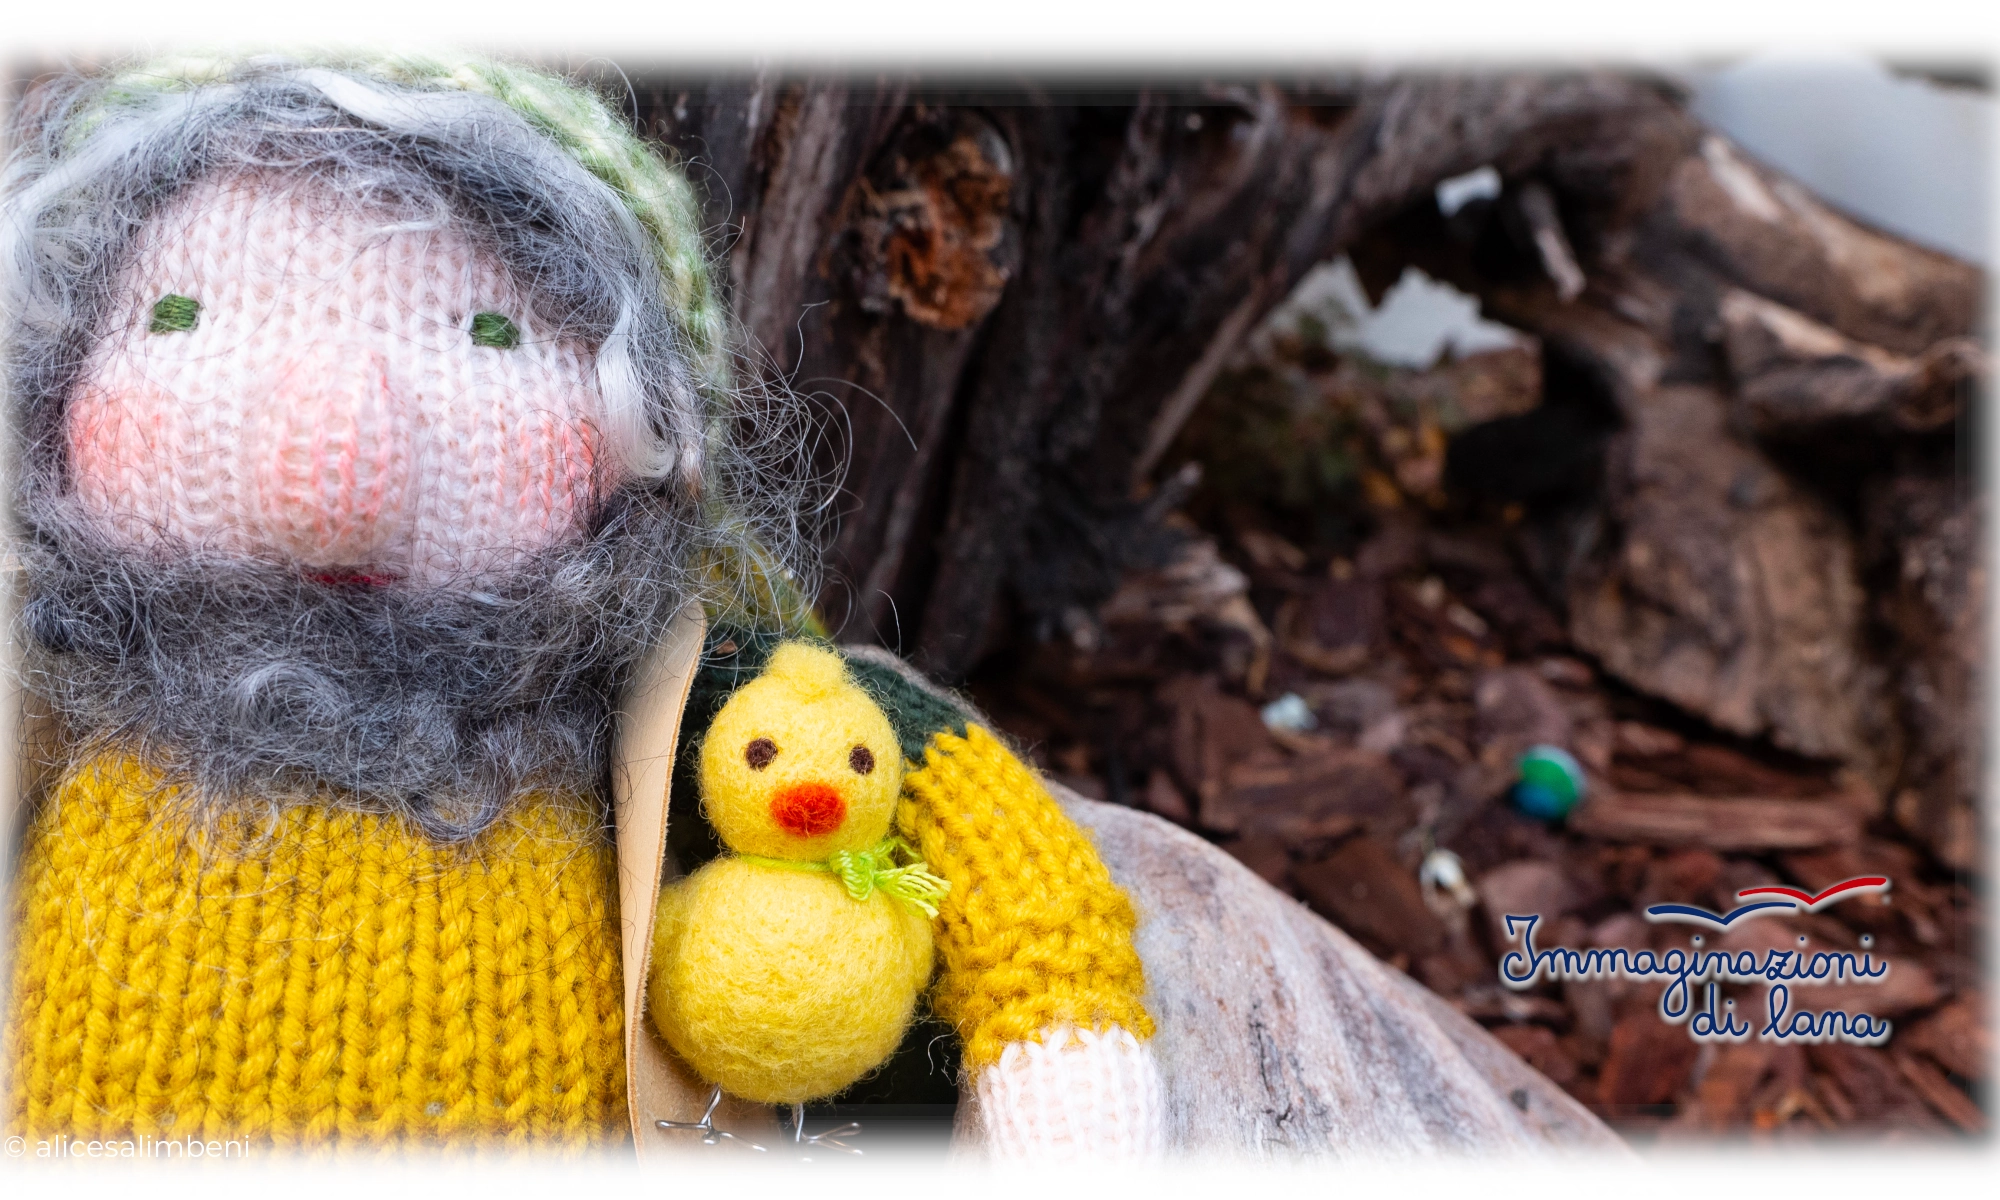 Bambole Waldorf in lana cardata -Immaginazioni di lana -Home